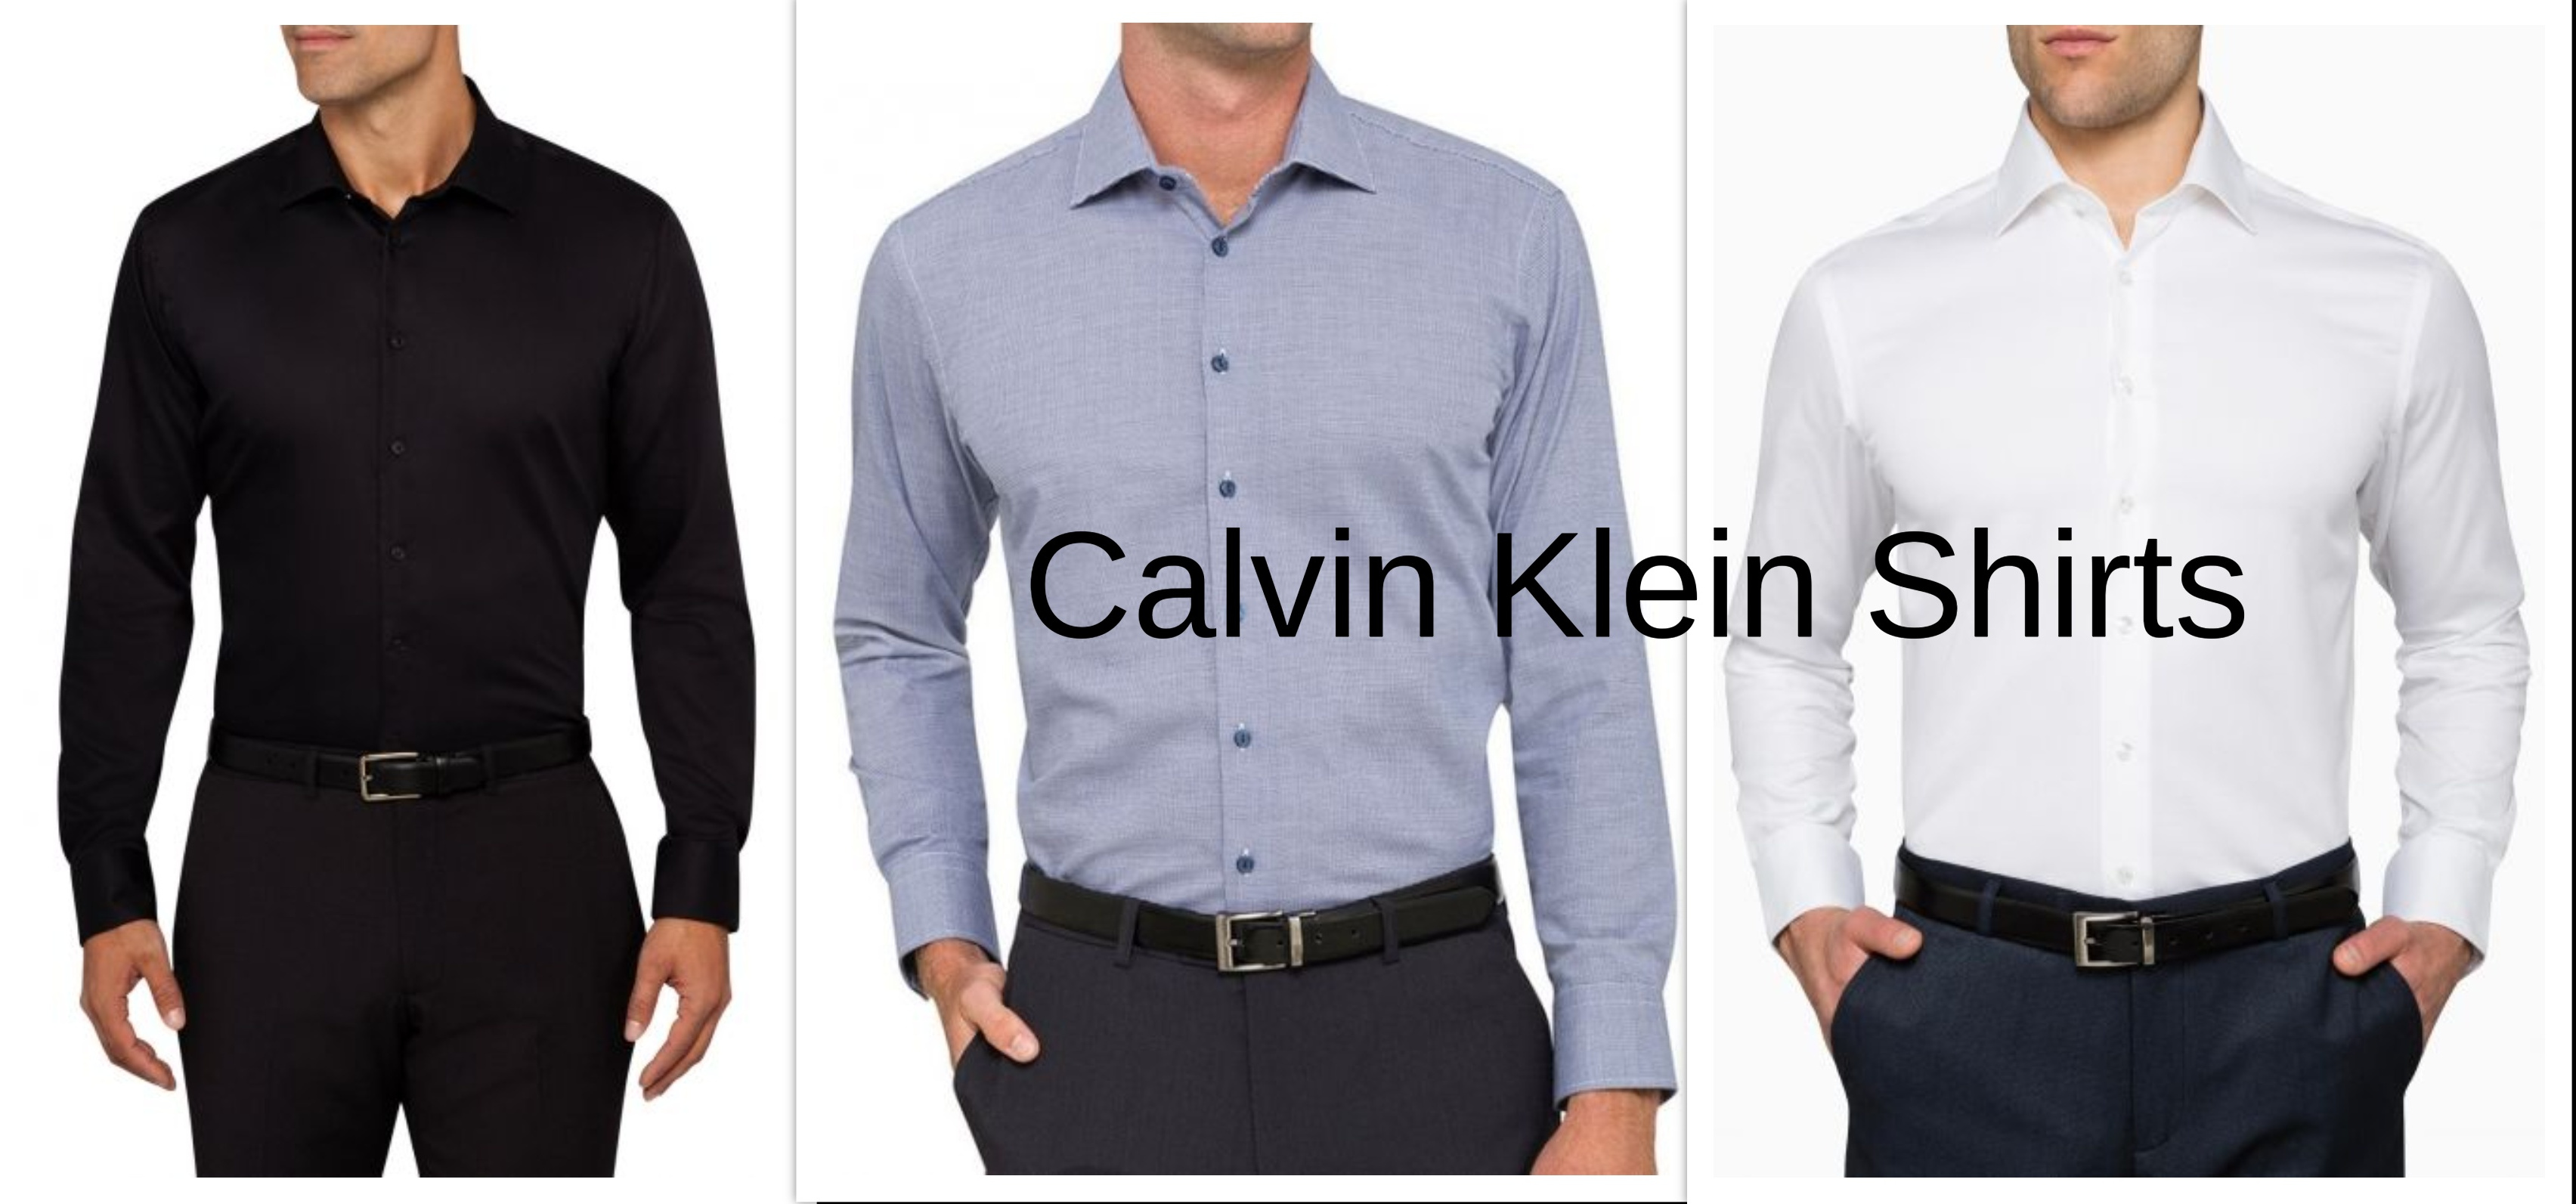 Calvin Klein Shirts